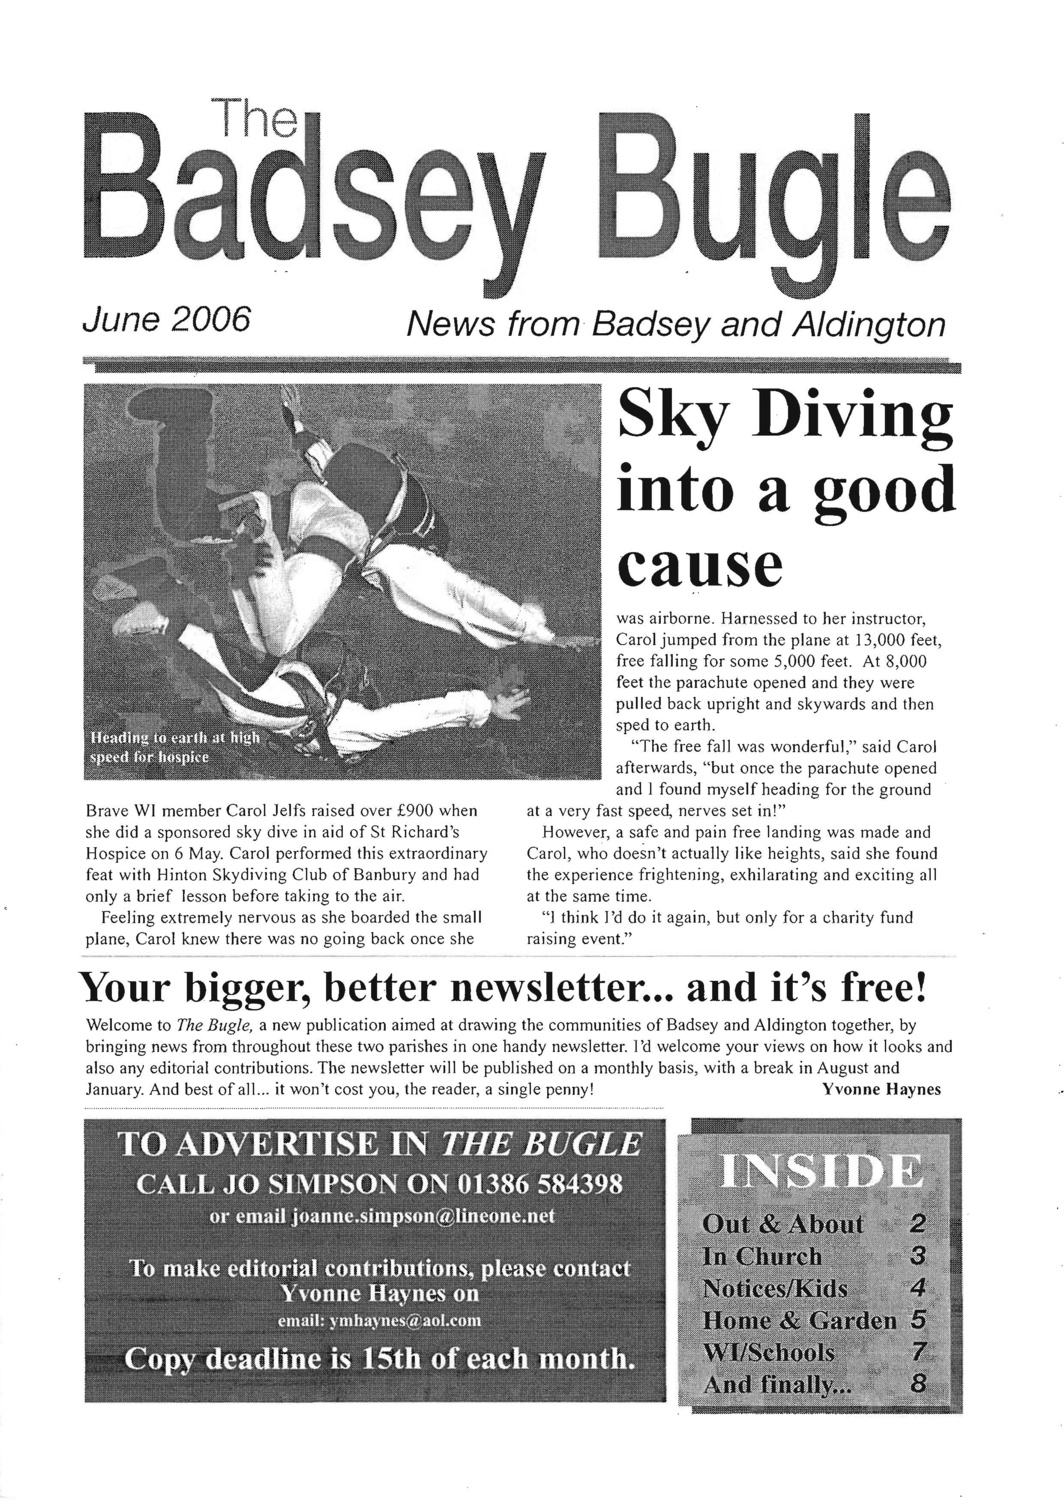 The Badsey Bugle, June 2006